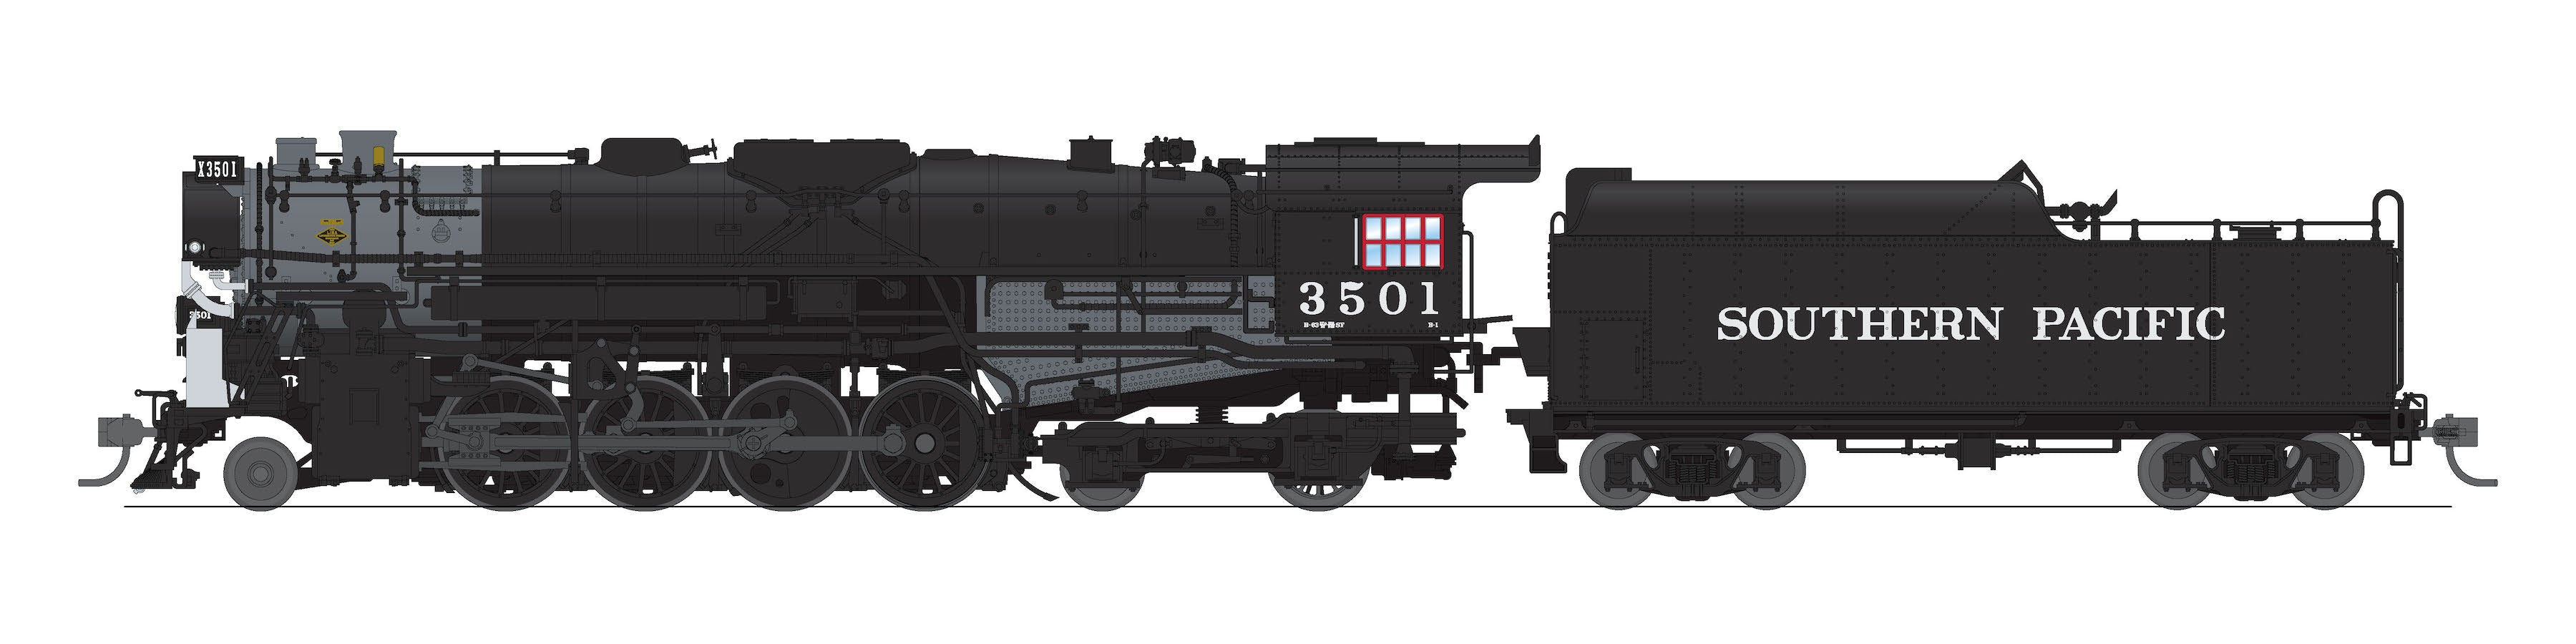 7903 Southern Pacific 2-8-4 Berkshire, T1a #3509, 4-axle Tender, Paragon4 Sound/DC/DCC, Smoke, HO